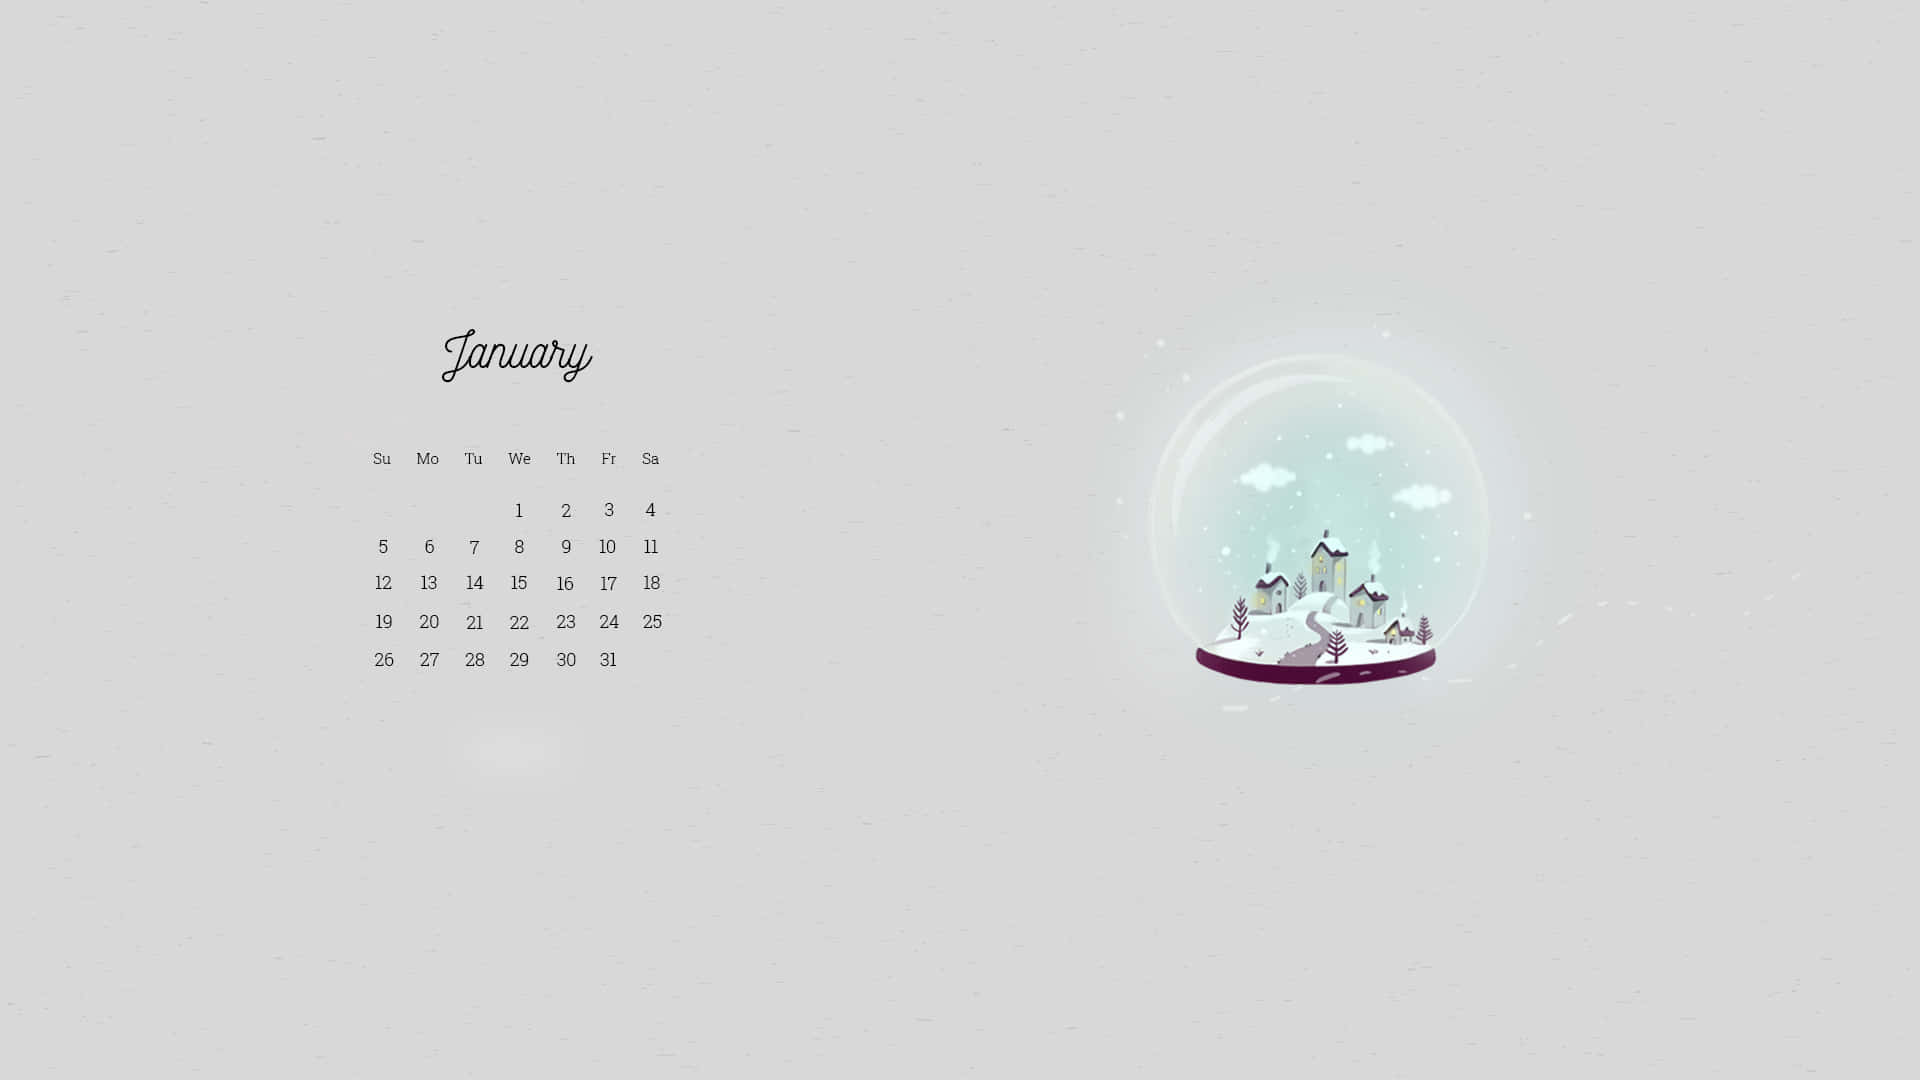 Enjoy January with Cuteness! Wallpaper